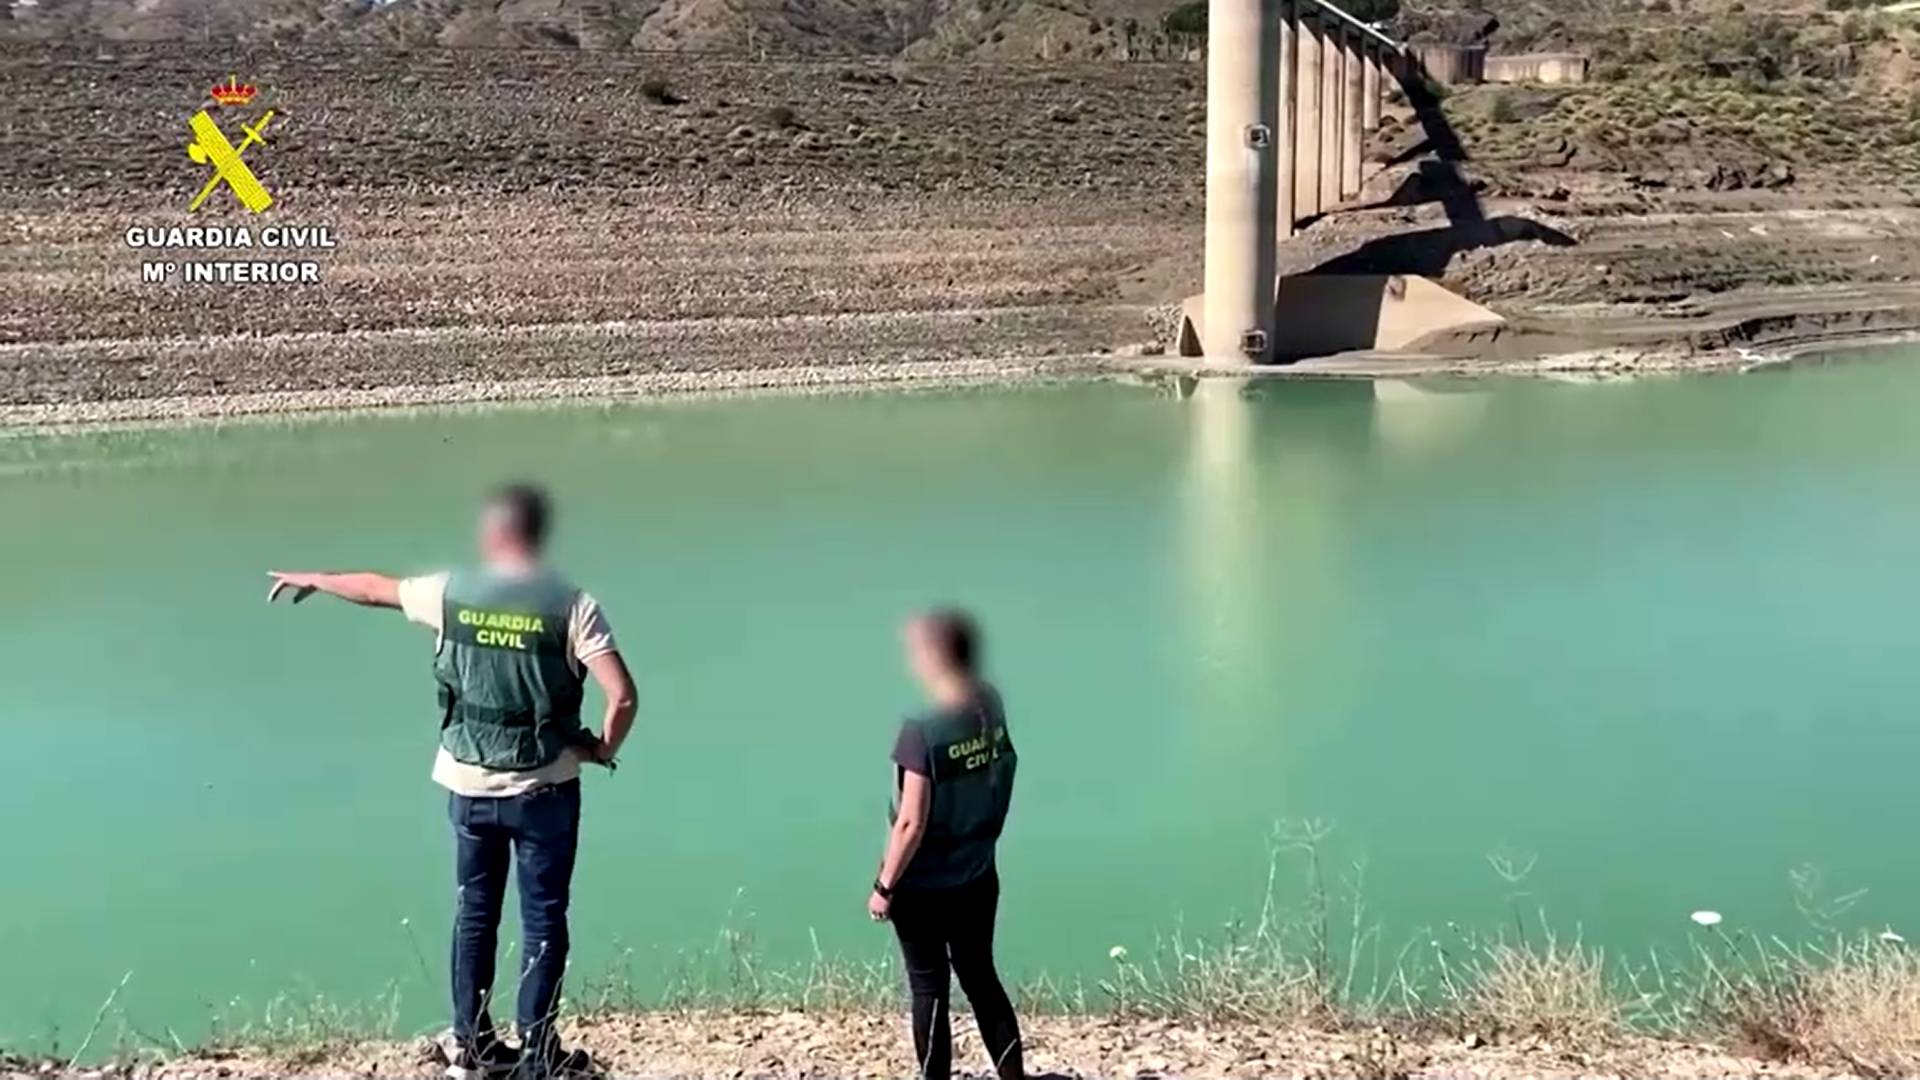 Guardia Civil officers investigating illegal wells in Axarquia. /Guardia Civil